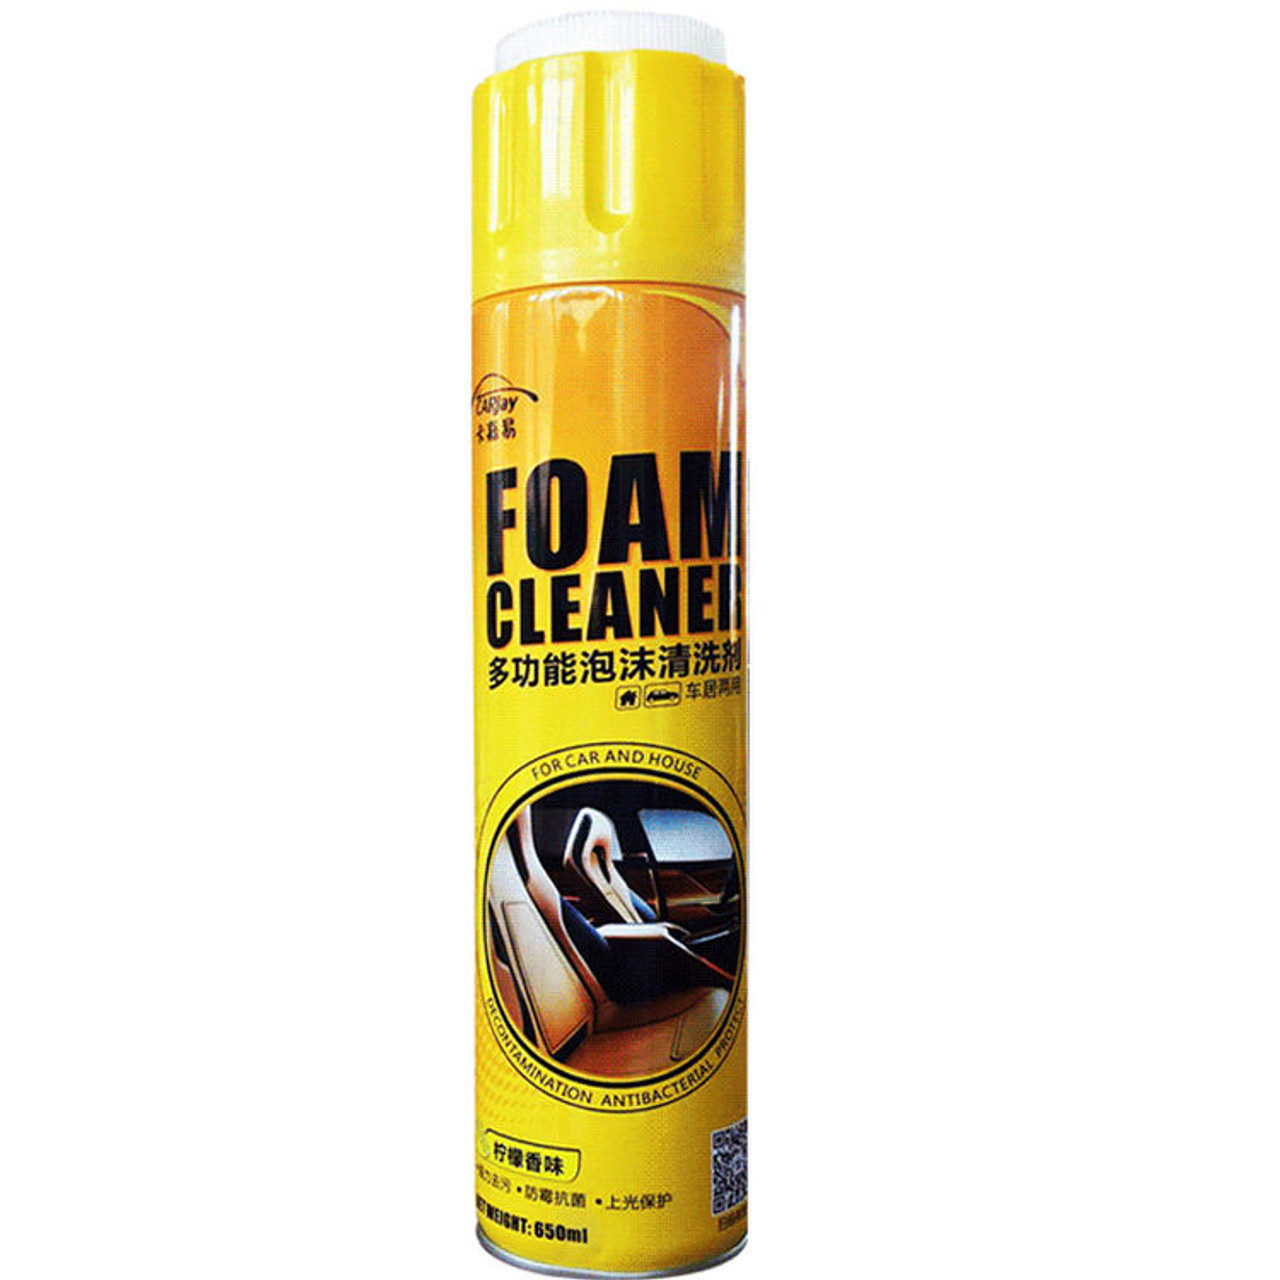 Carjay Foam Cleaner 650ml - Goldunited Sdn Bhd